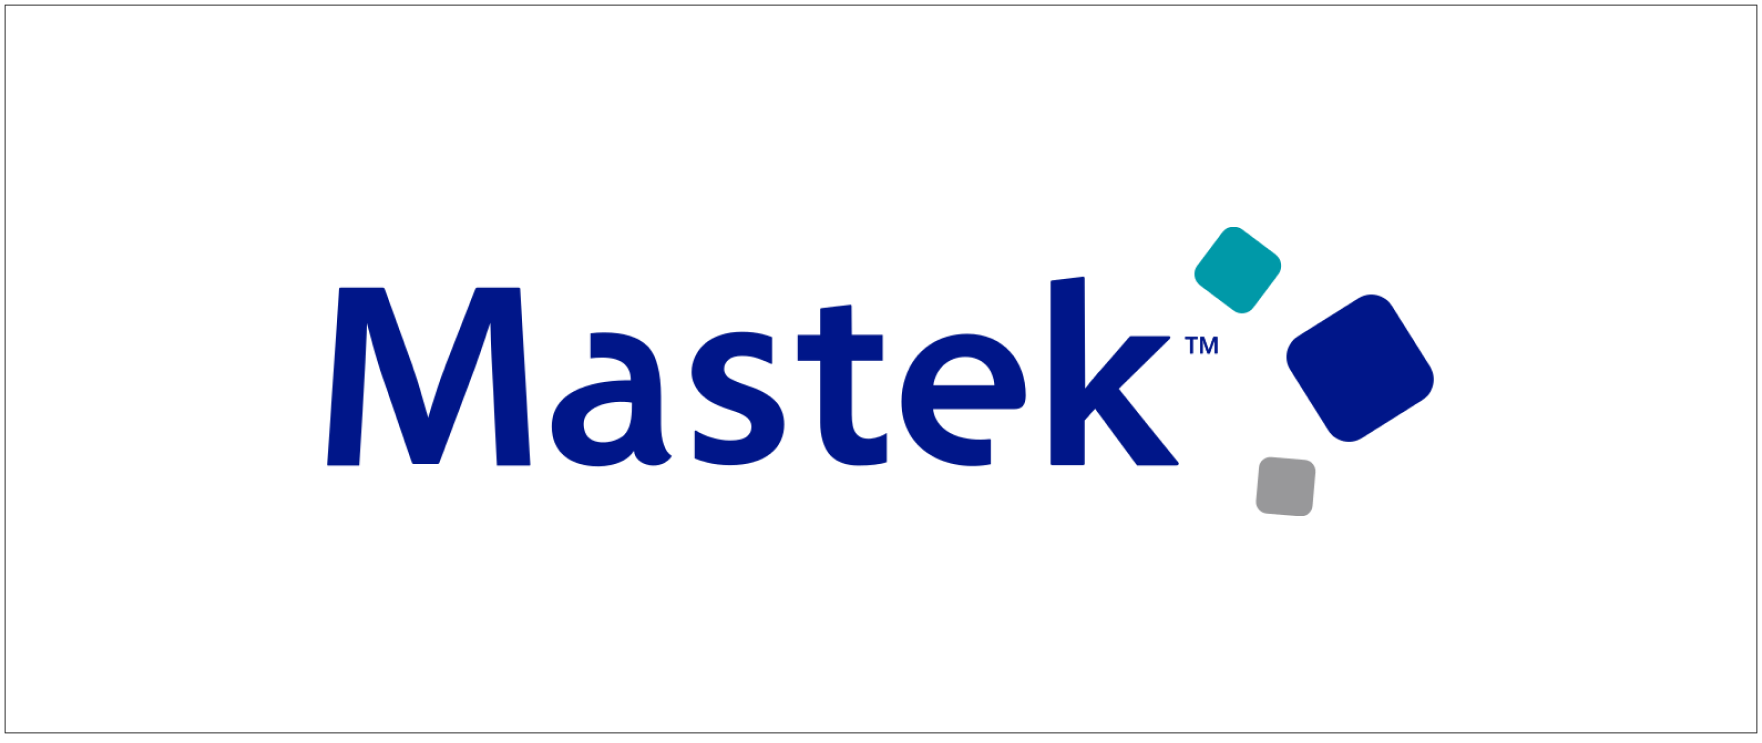 Mastek logo